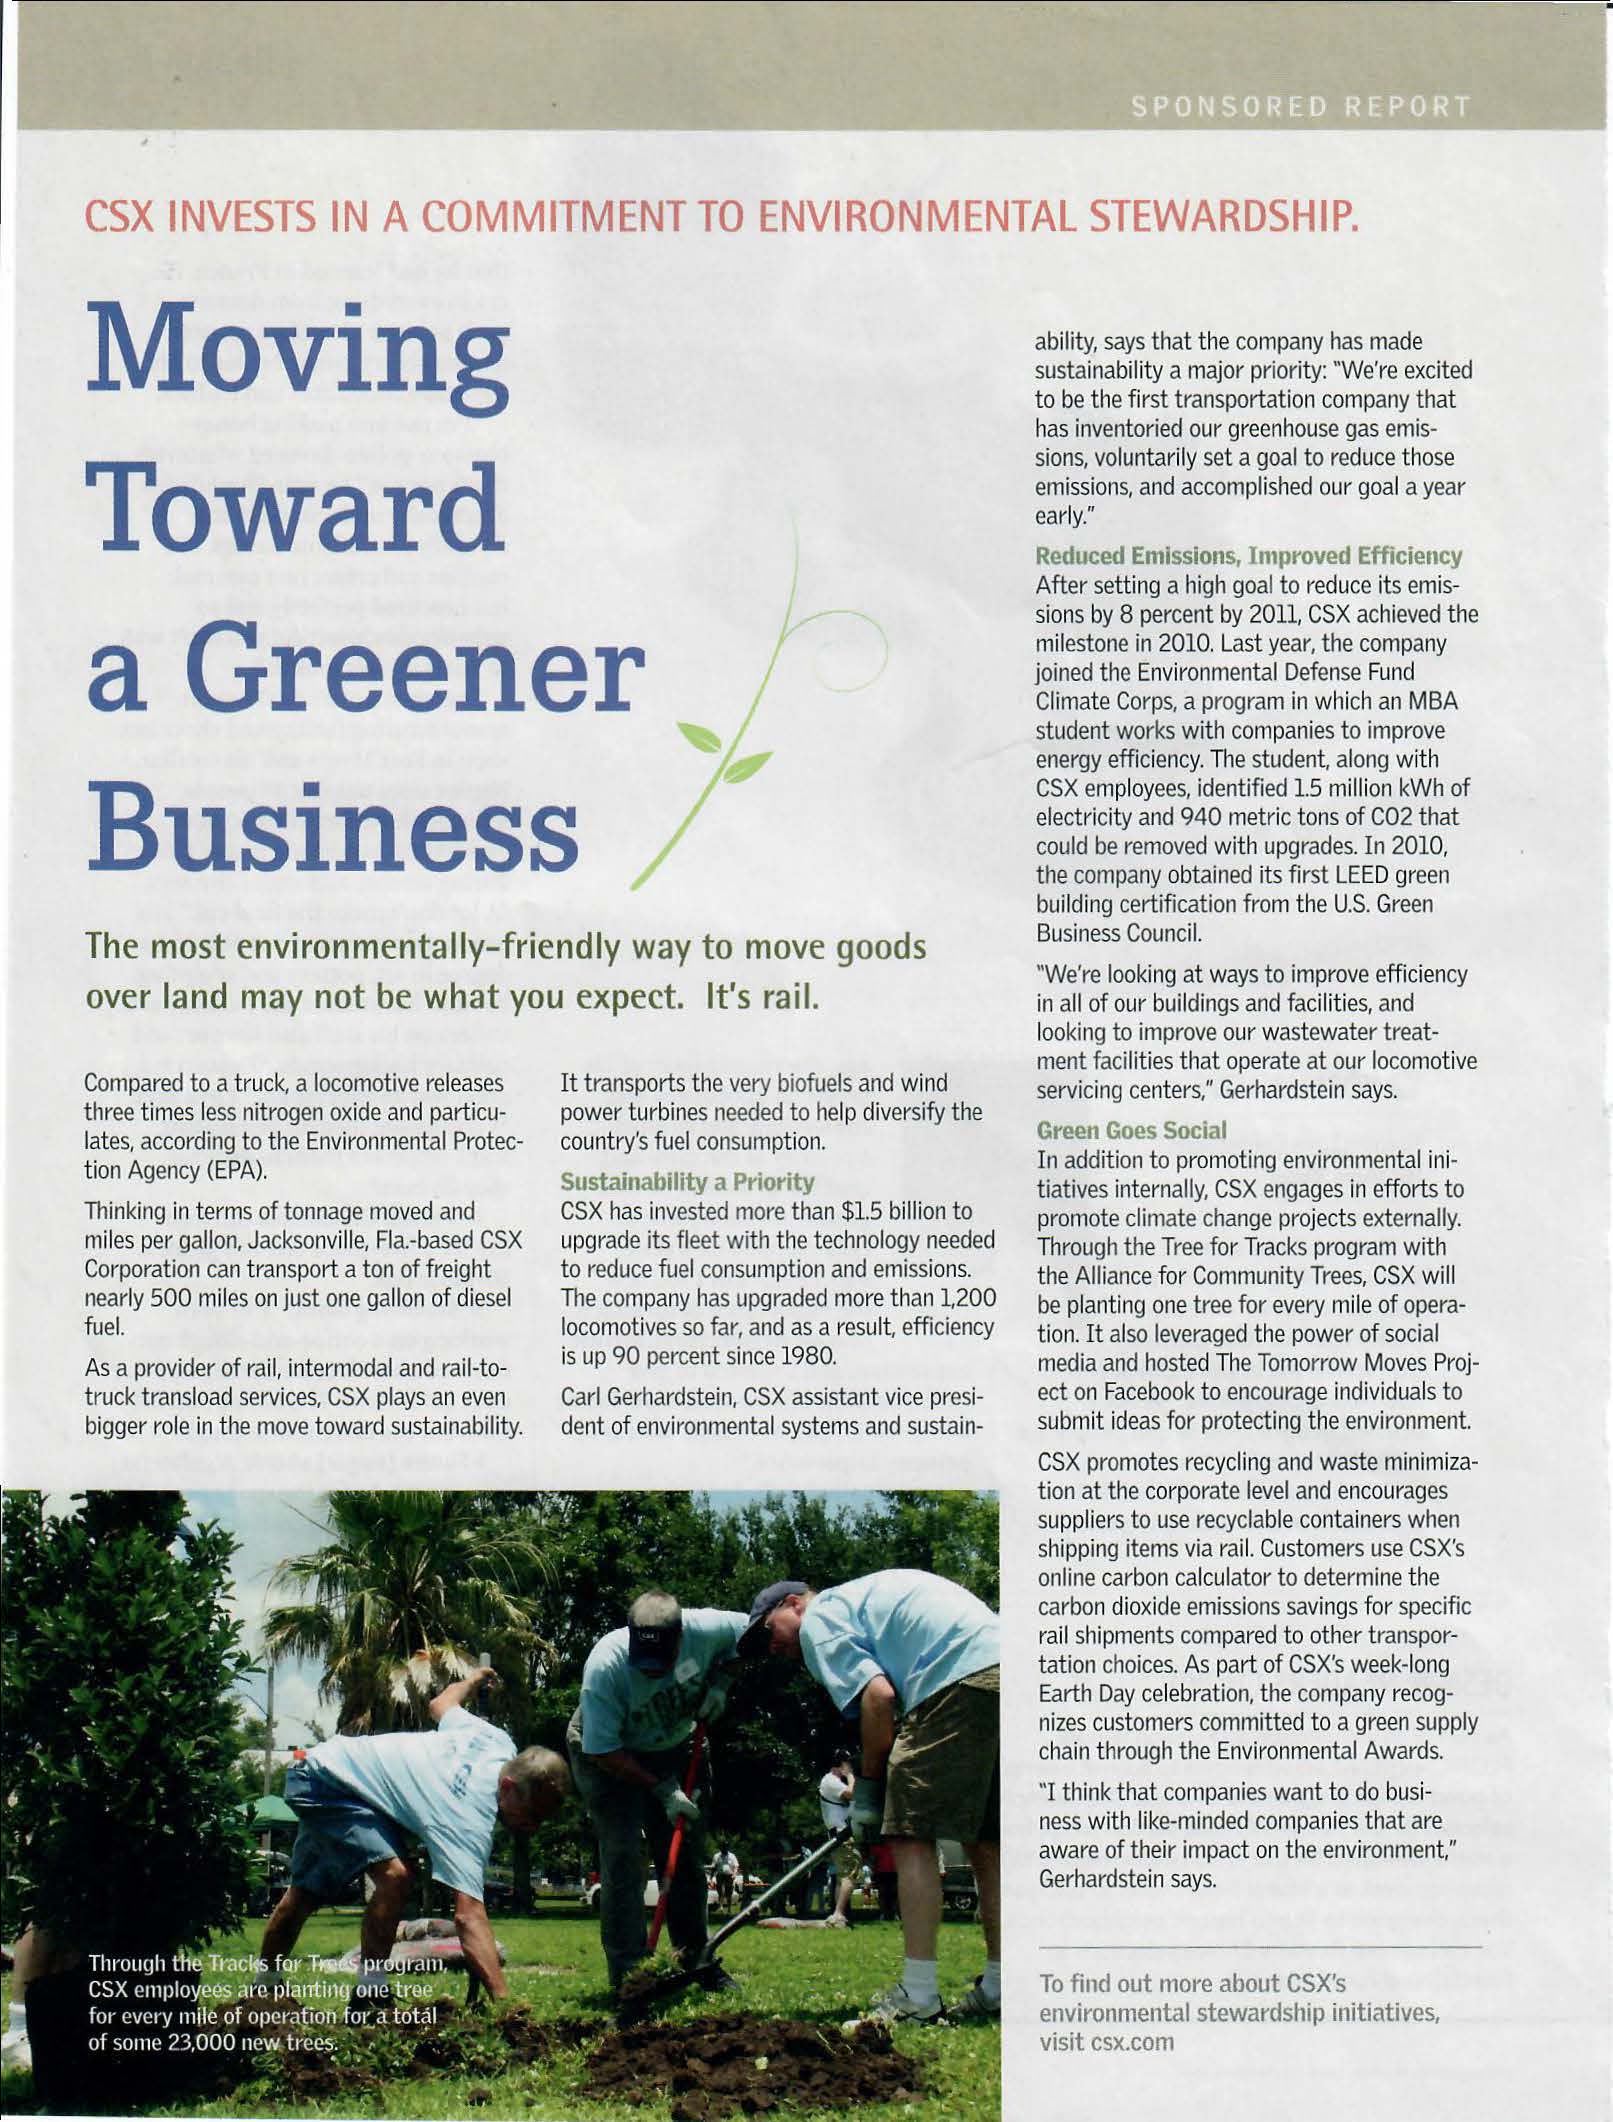 Florida Trend Magazine: Moving Toward a Greener Business